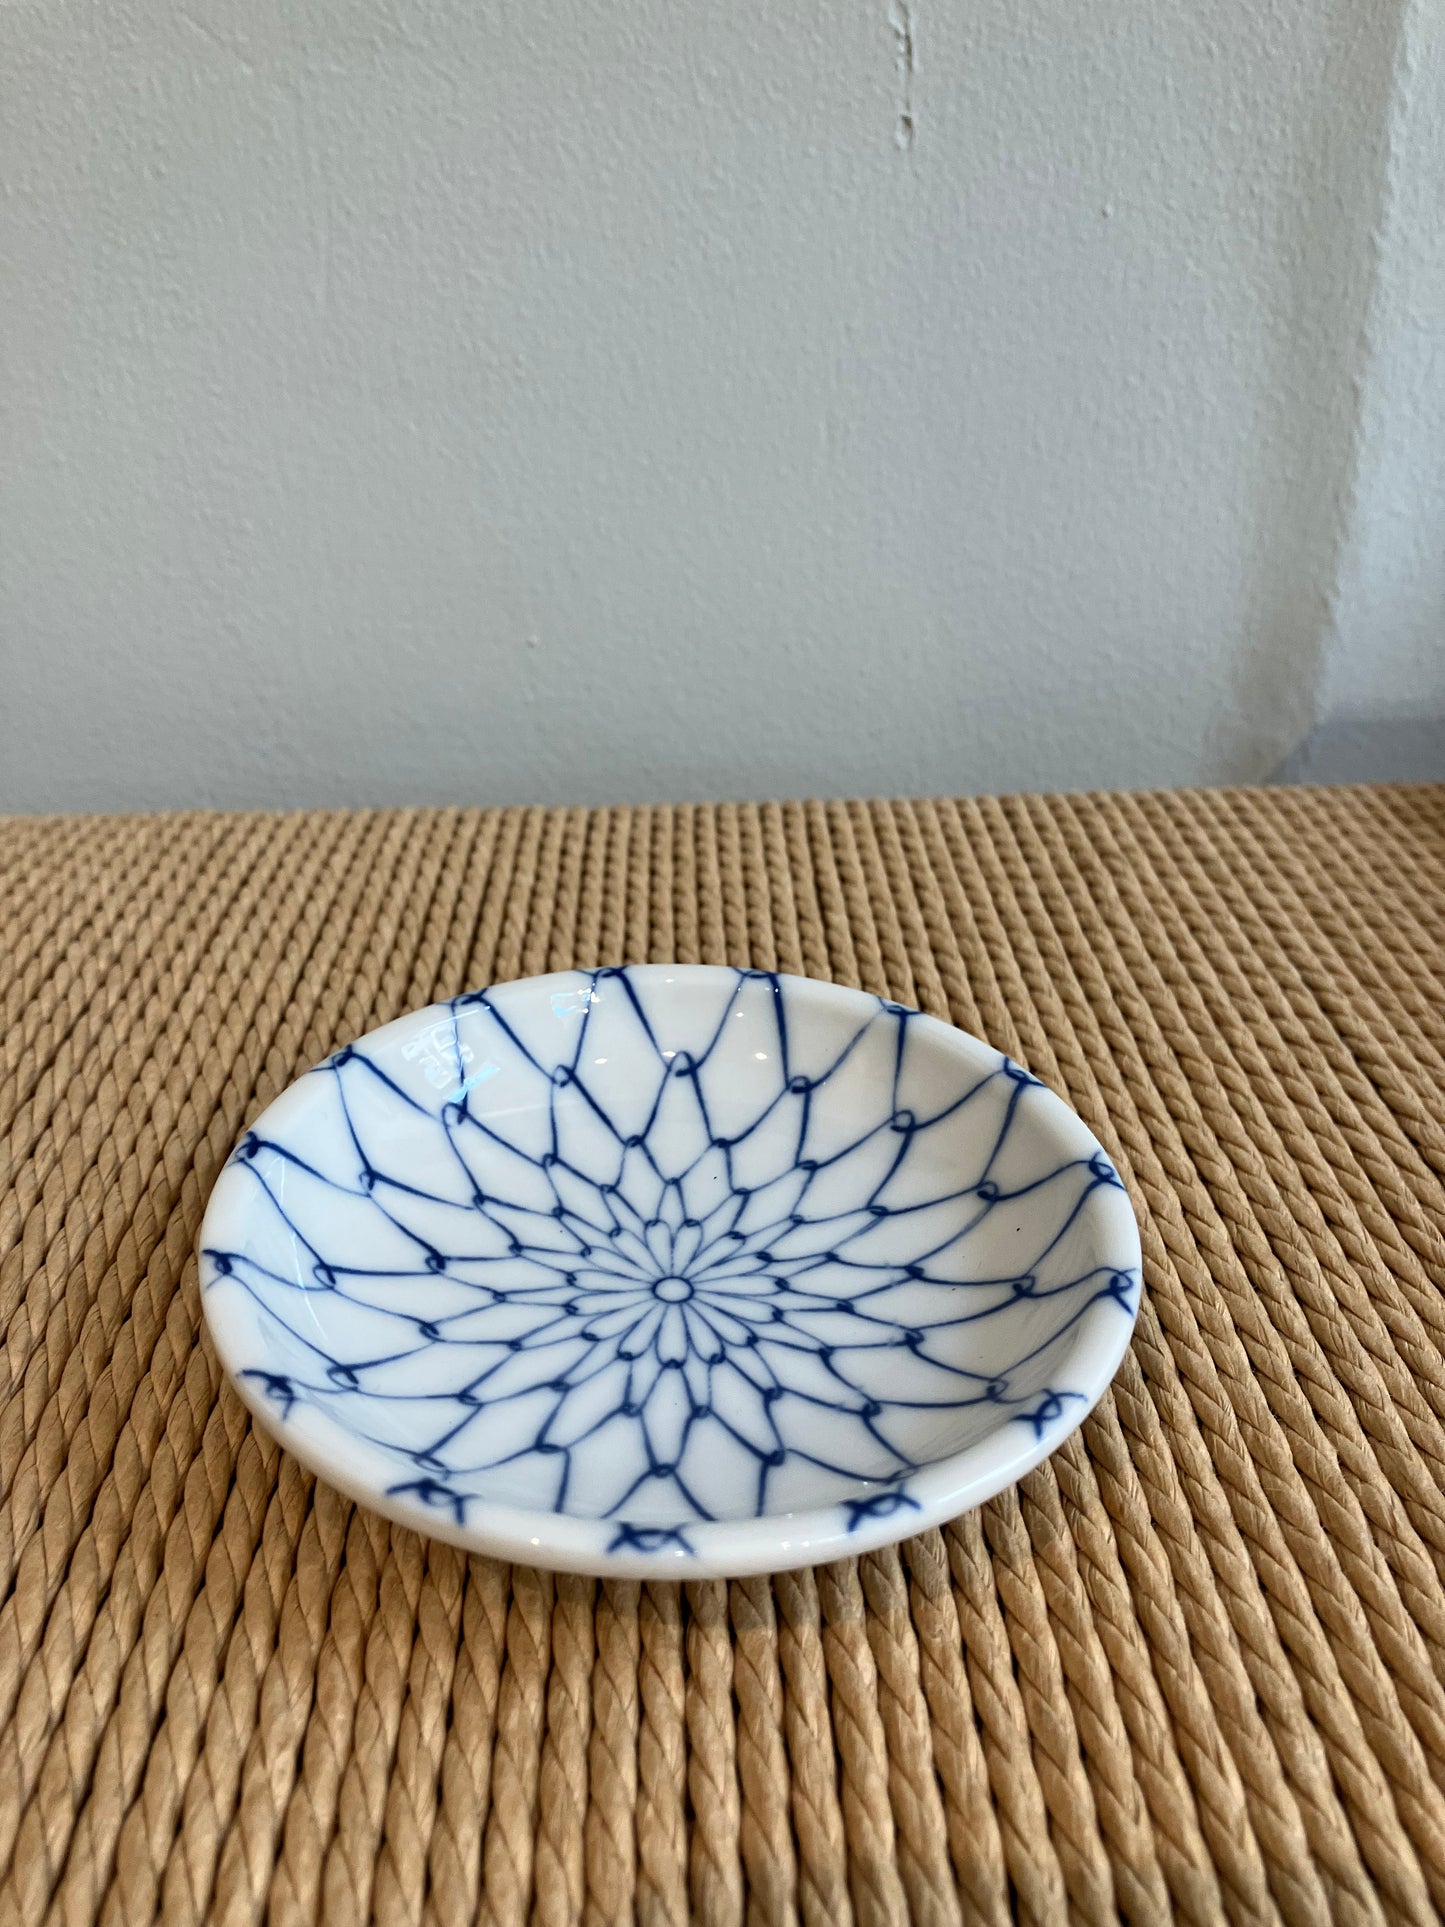 Lille skål med blåt blomstermønster